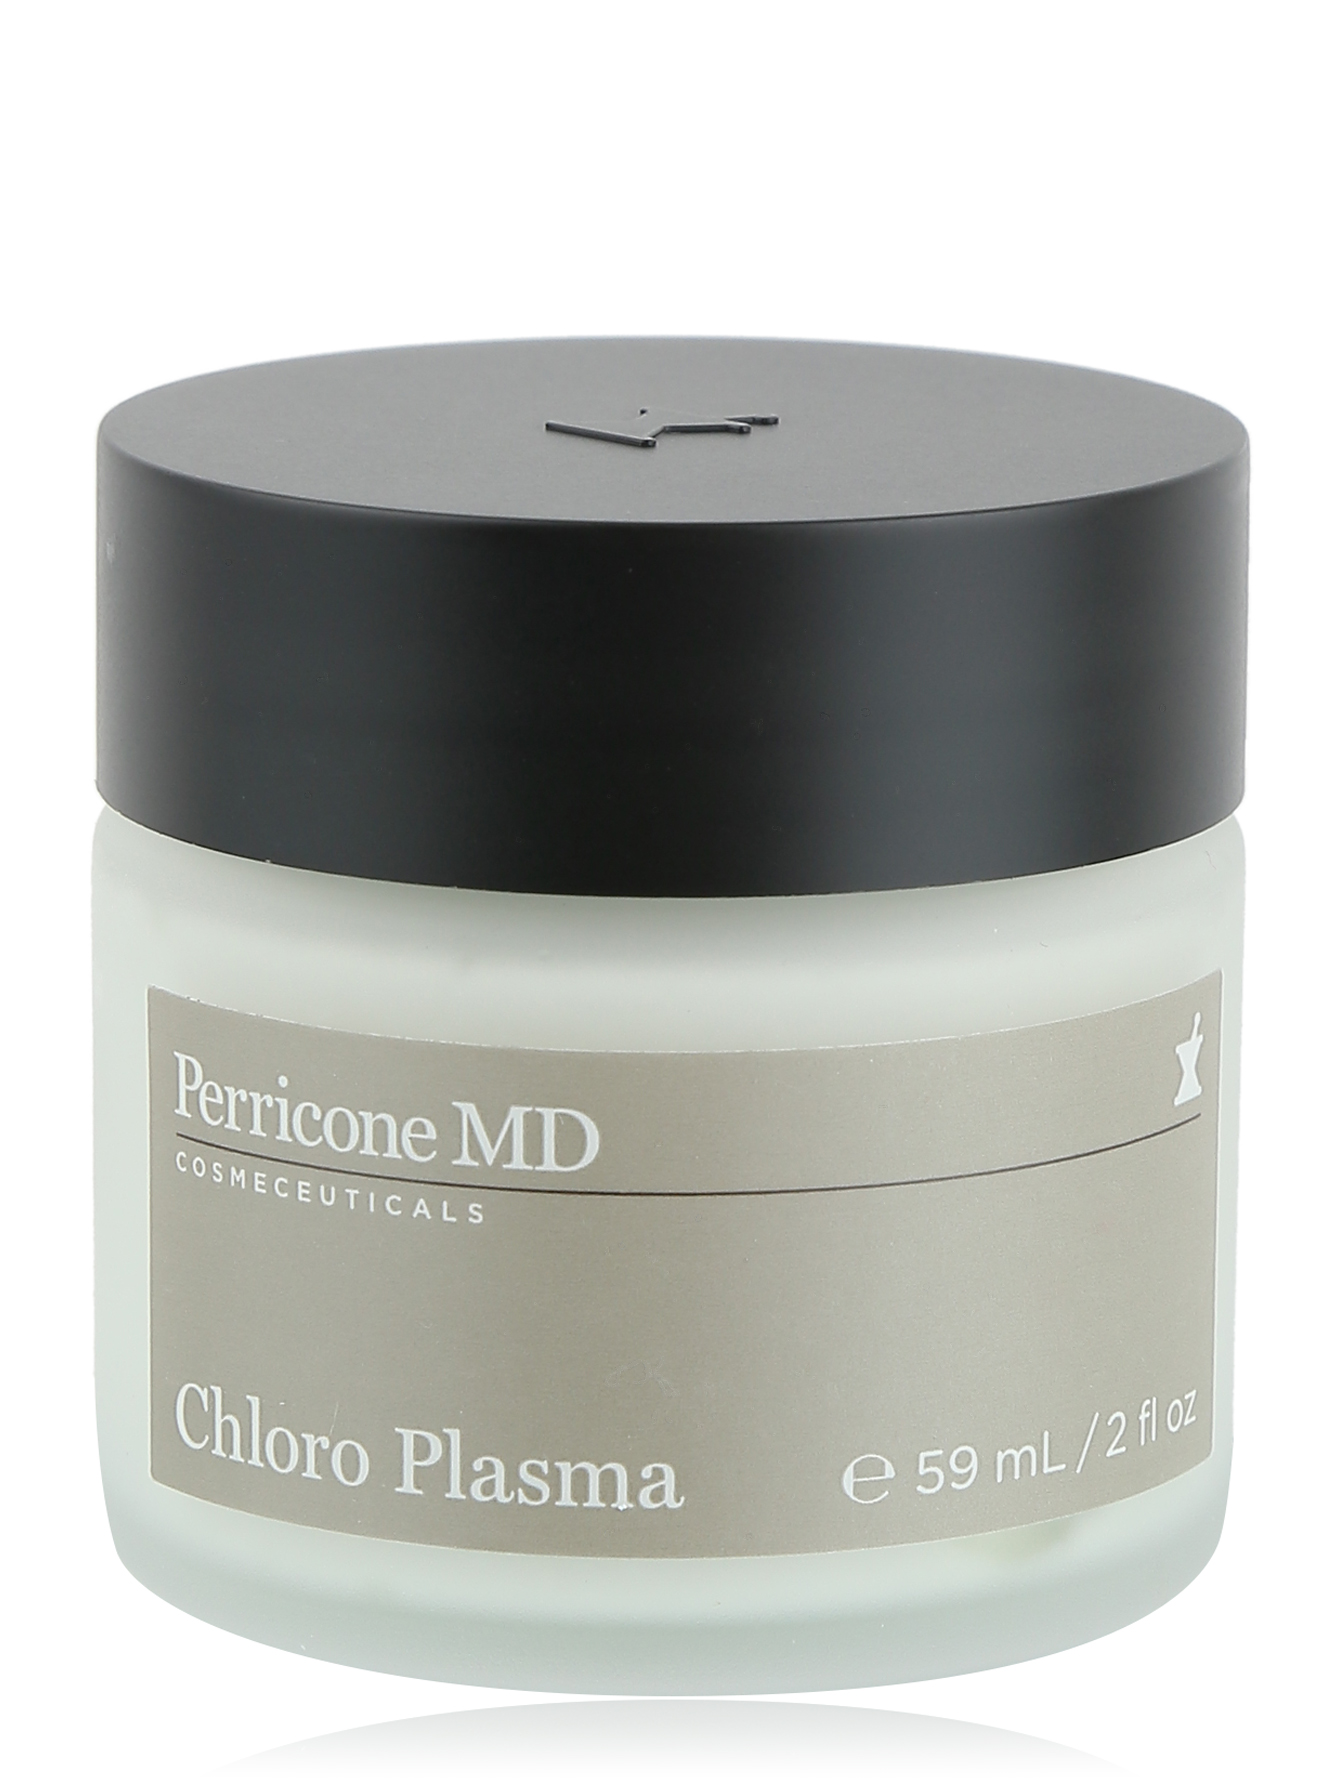 Очищающая маска хлоро плазма - Skin Care, 59ml - Общий вид